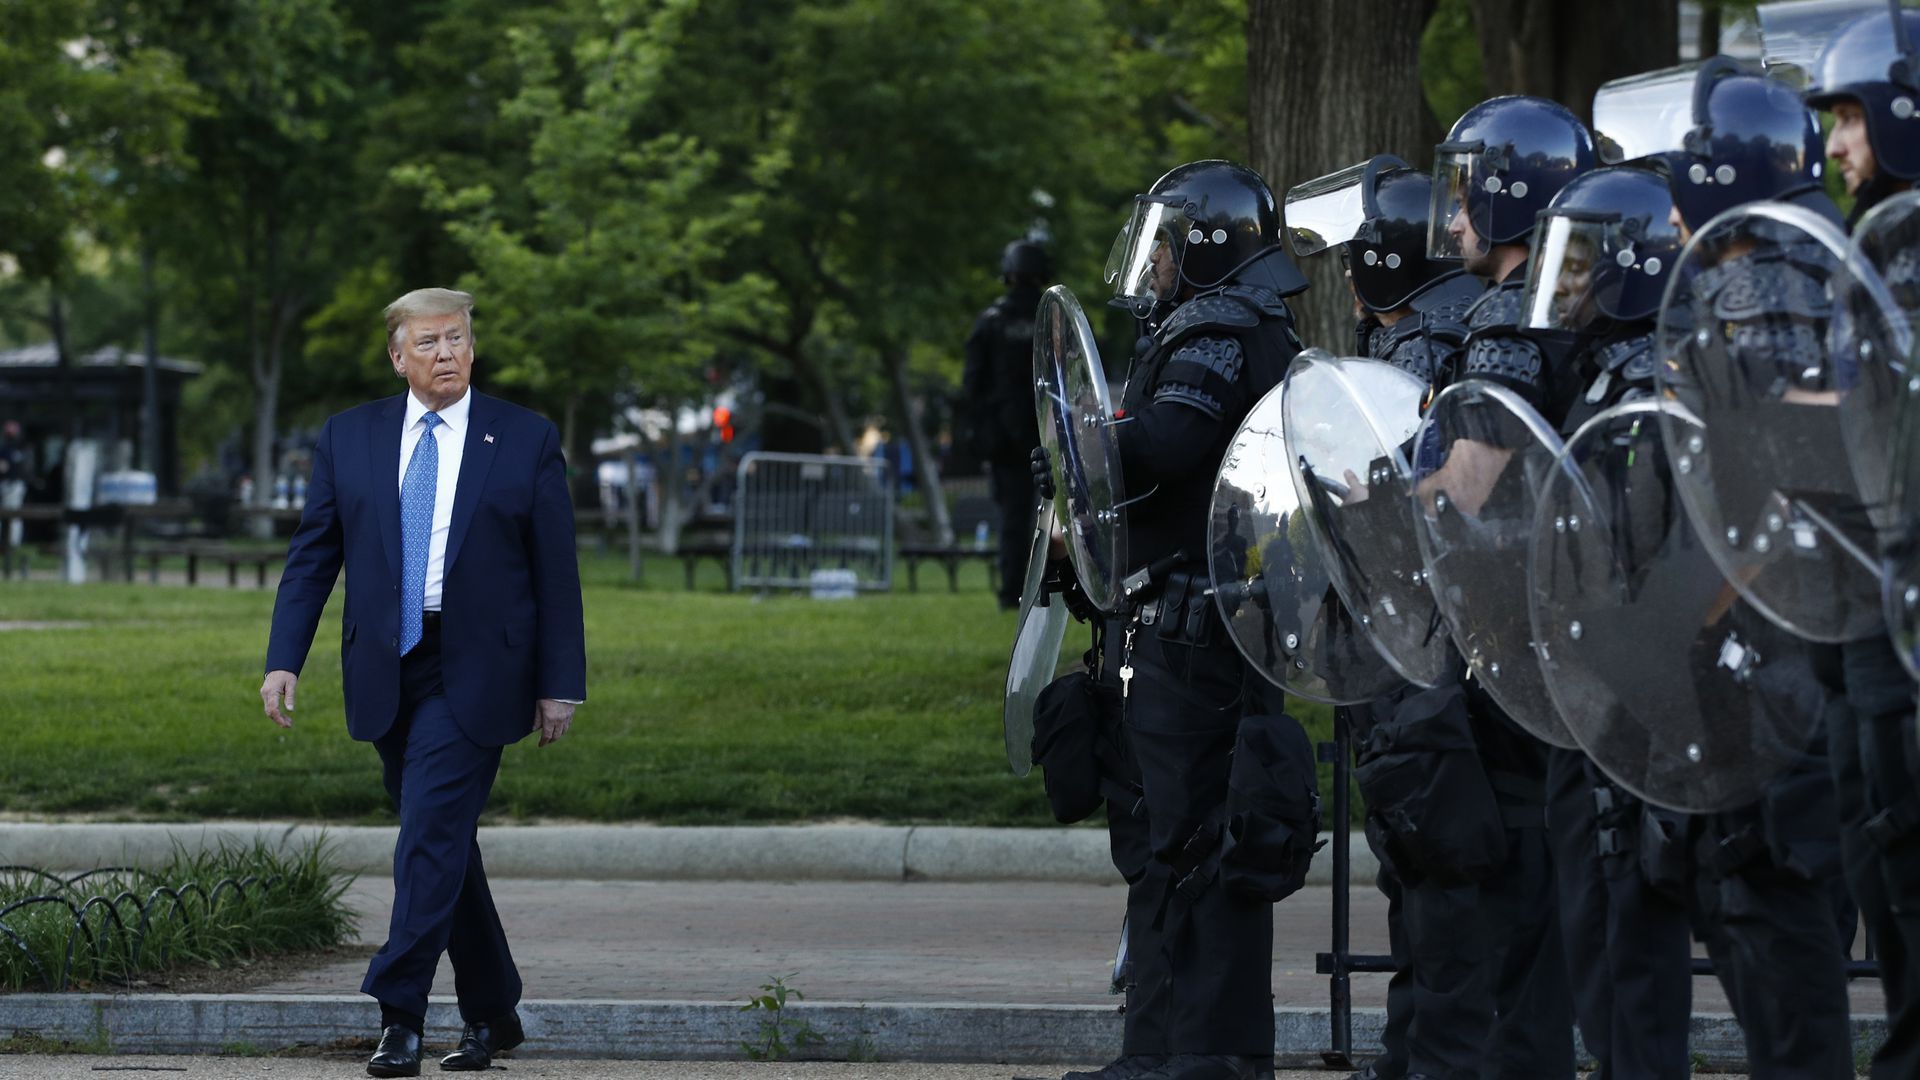 Trump walking past police